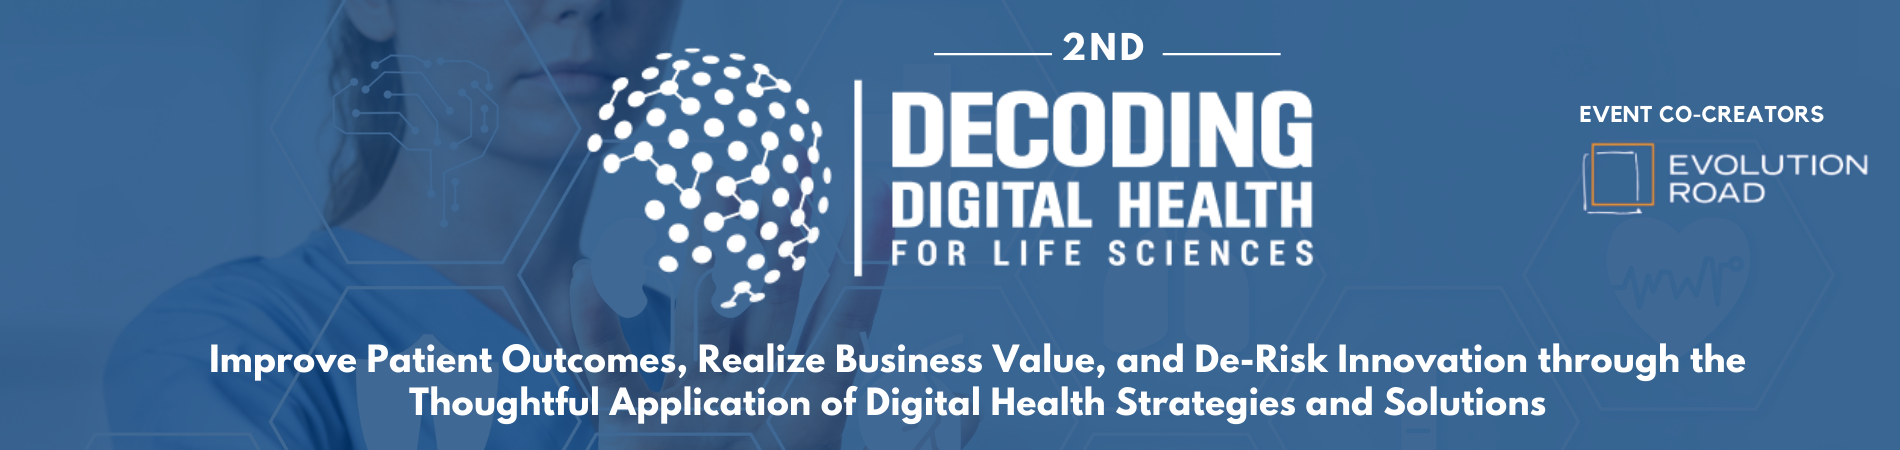 2nd Decoding Digital Health